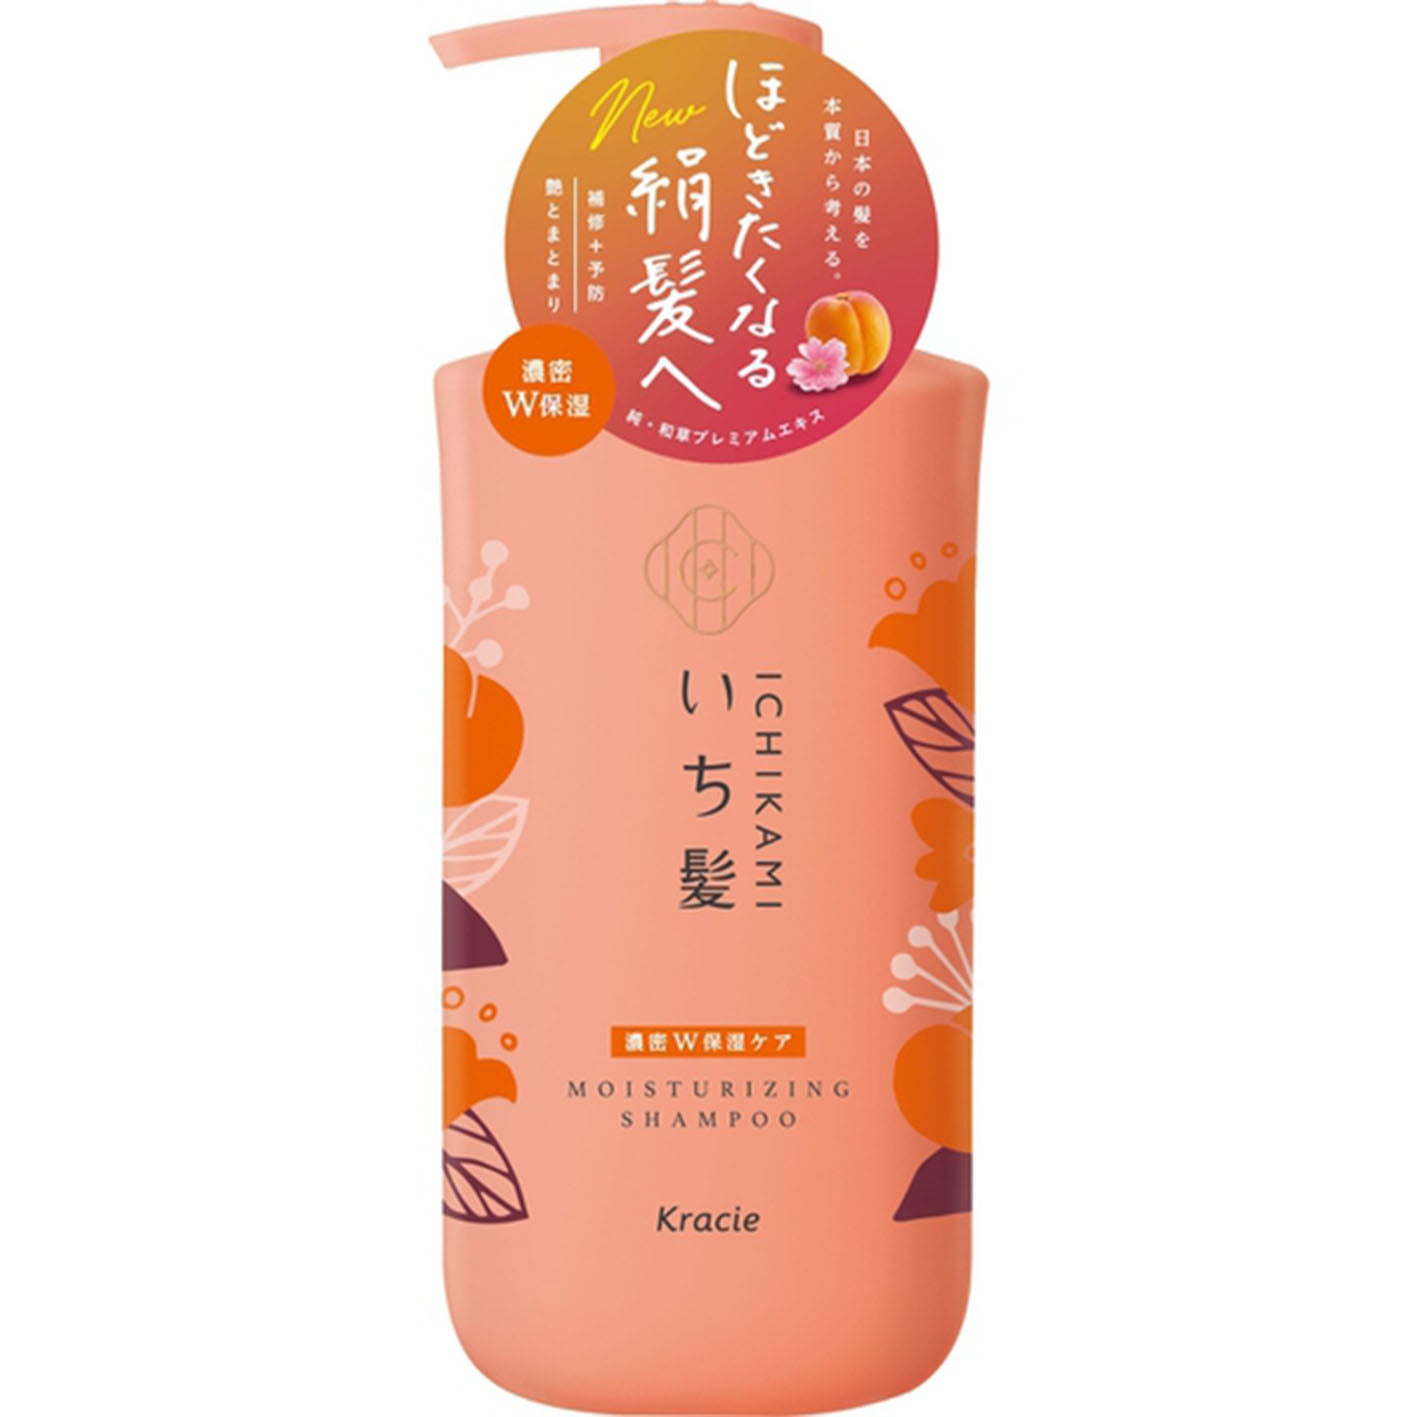 Ichikami Dense W Moisturizing Care Hair Shampoo Pump - 480ml - Harajuku Culture Japan - Japanease Products Store Beauty and Stationery